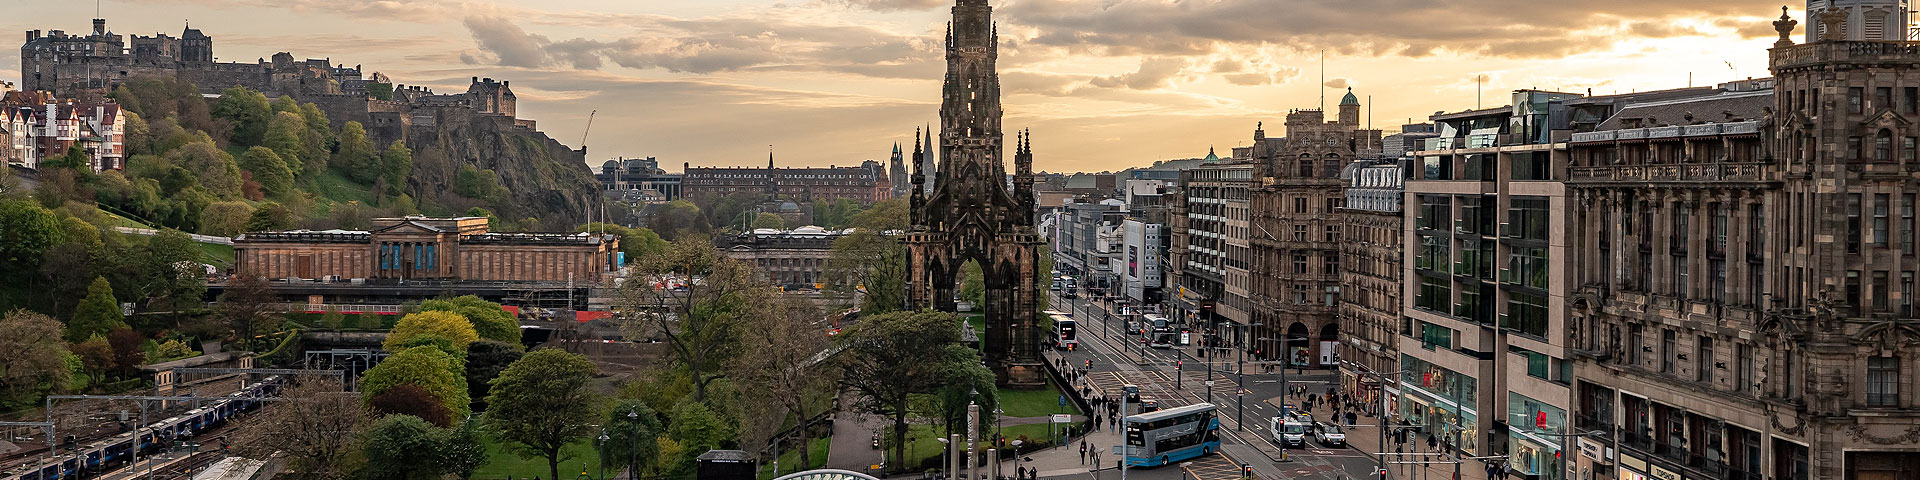 Edinburgh City Centre